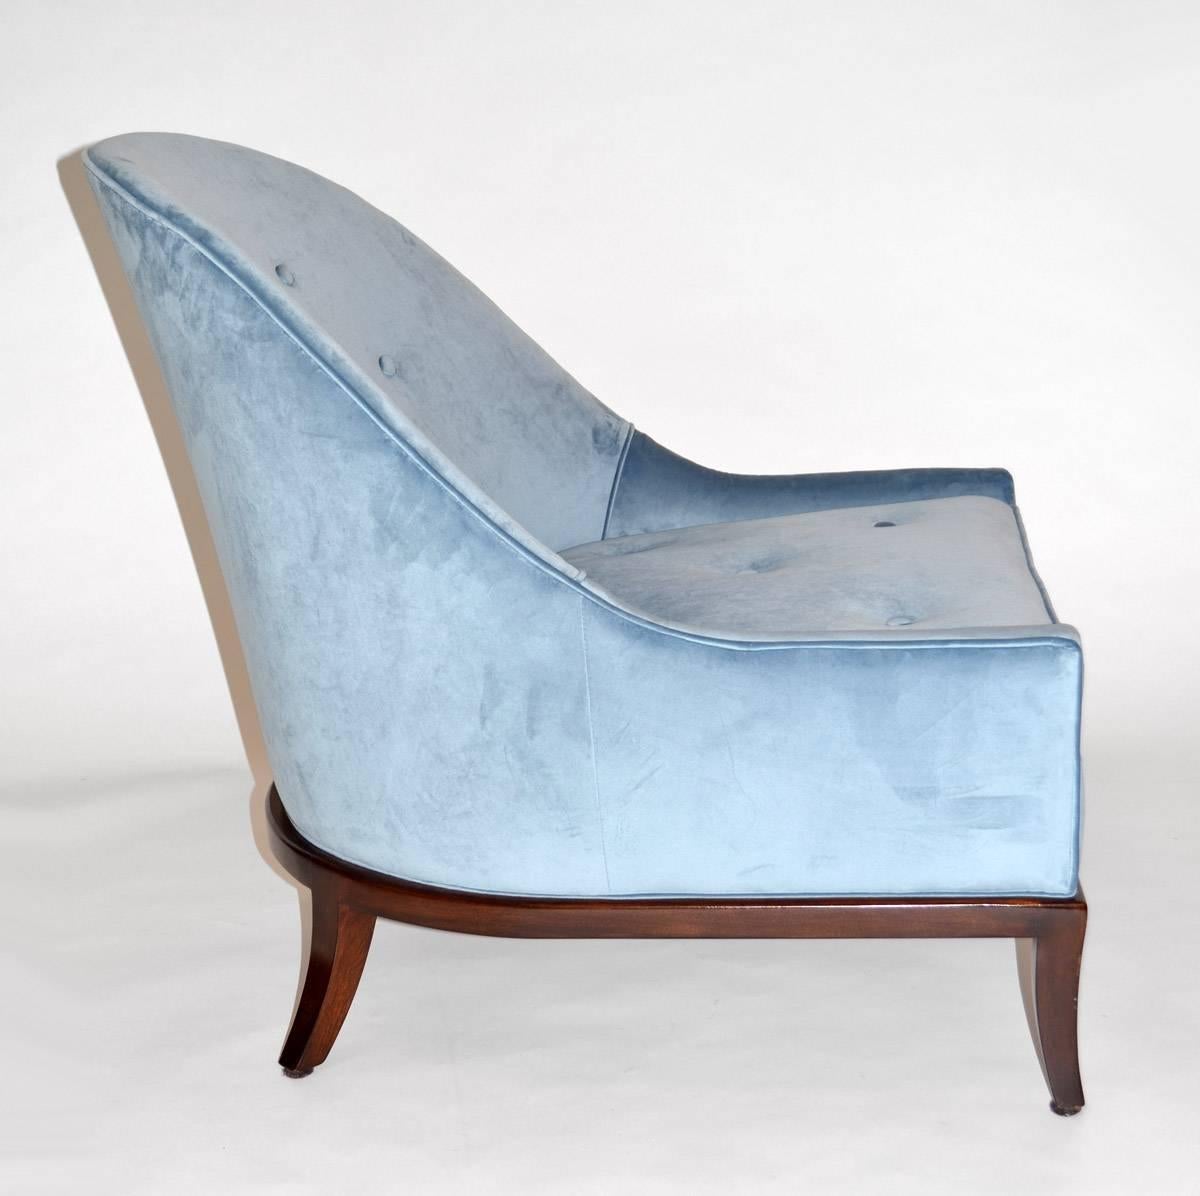 Mid-Century Modern Pair of Rare Slipper or Lounge Chairs by T.H. Robsjohn-Gibbings for Widdicomb